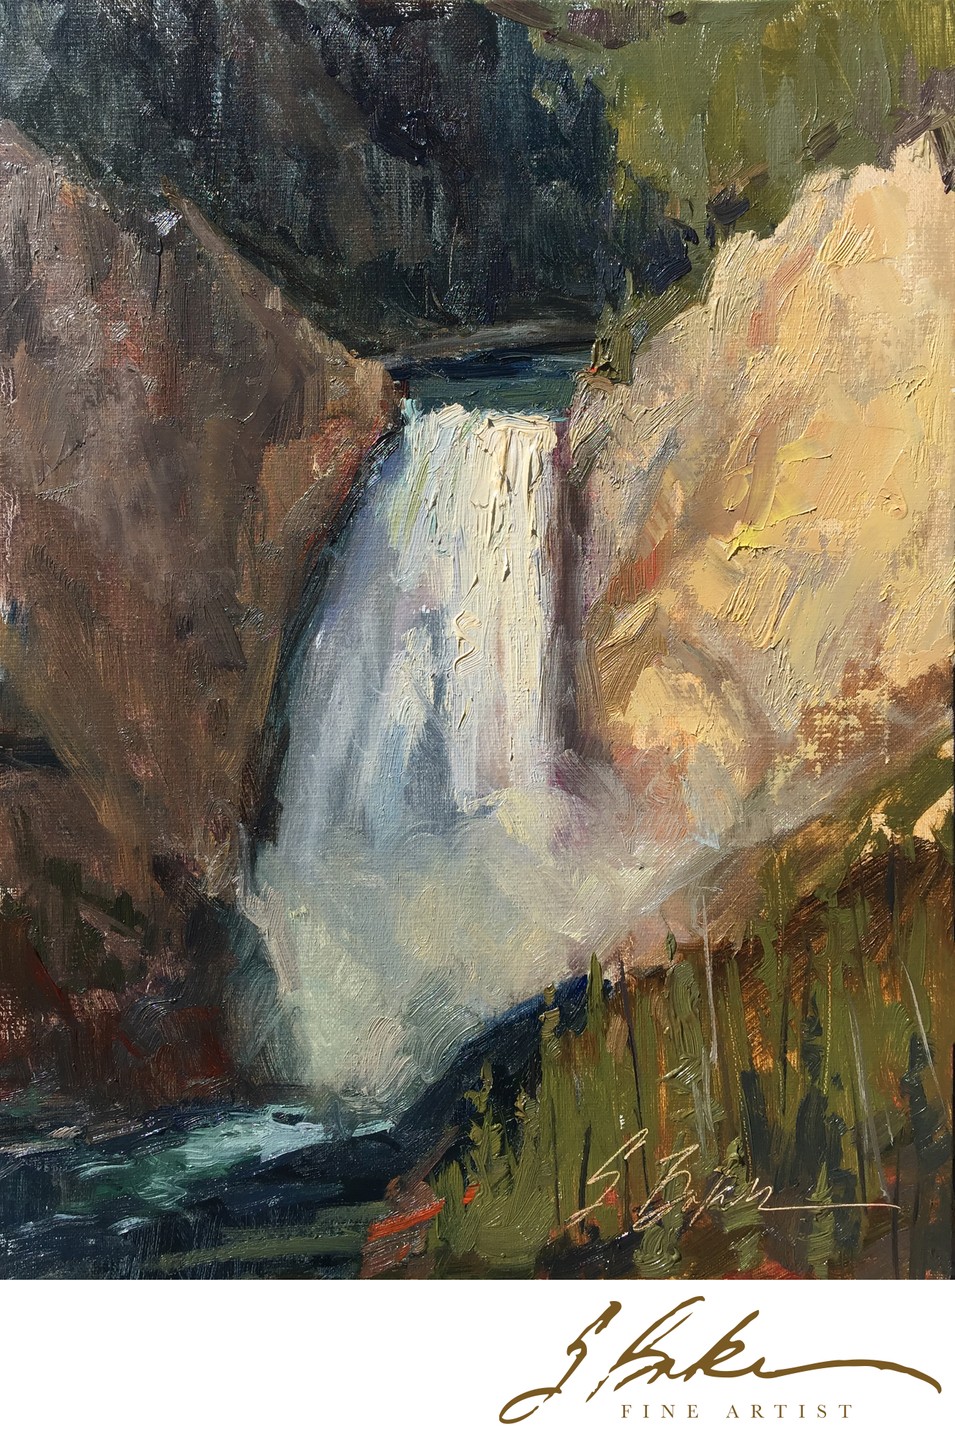 Lower Falls